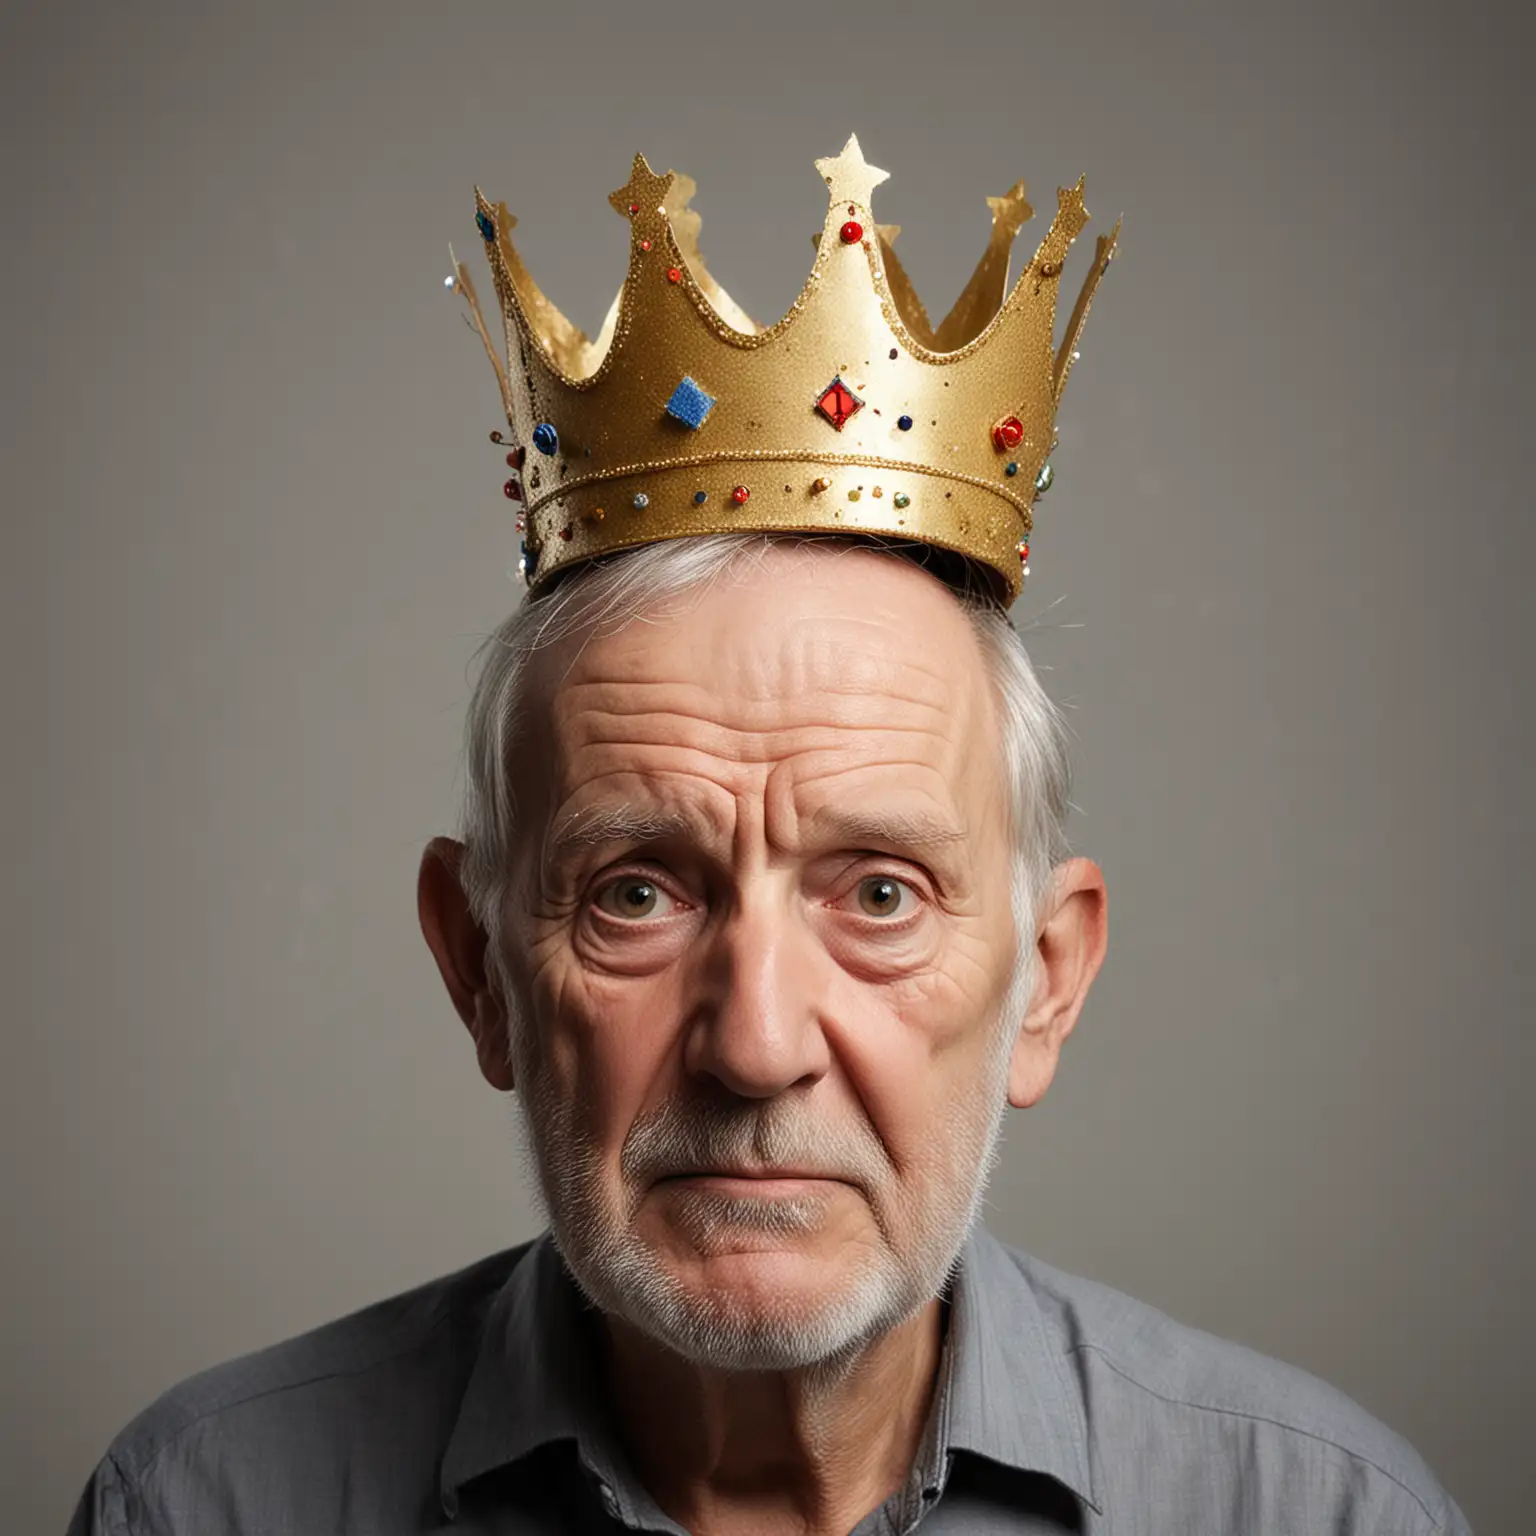 Elderly Man Wearing Birthday Crown in Dimly Lit Room